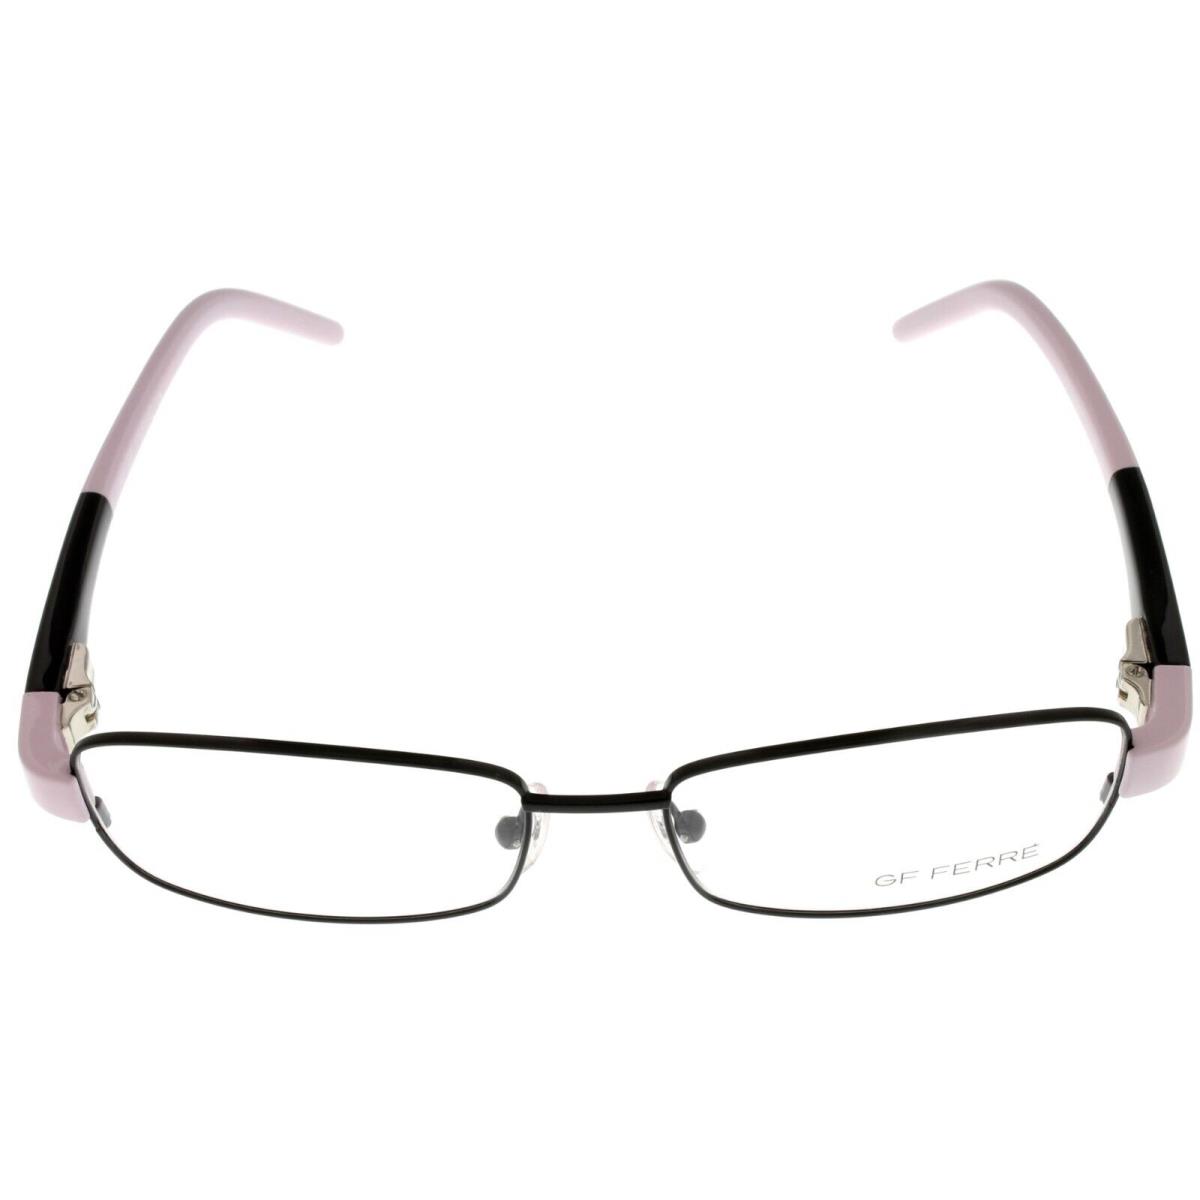 Gianfranco Ferre Eyeglasses Frame Women Black Pink Rectangular FF18501